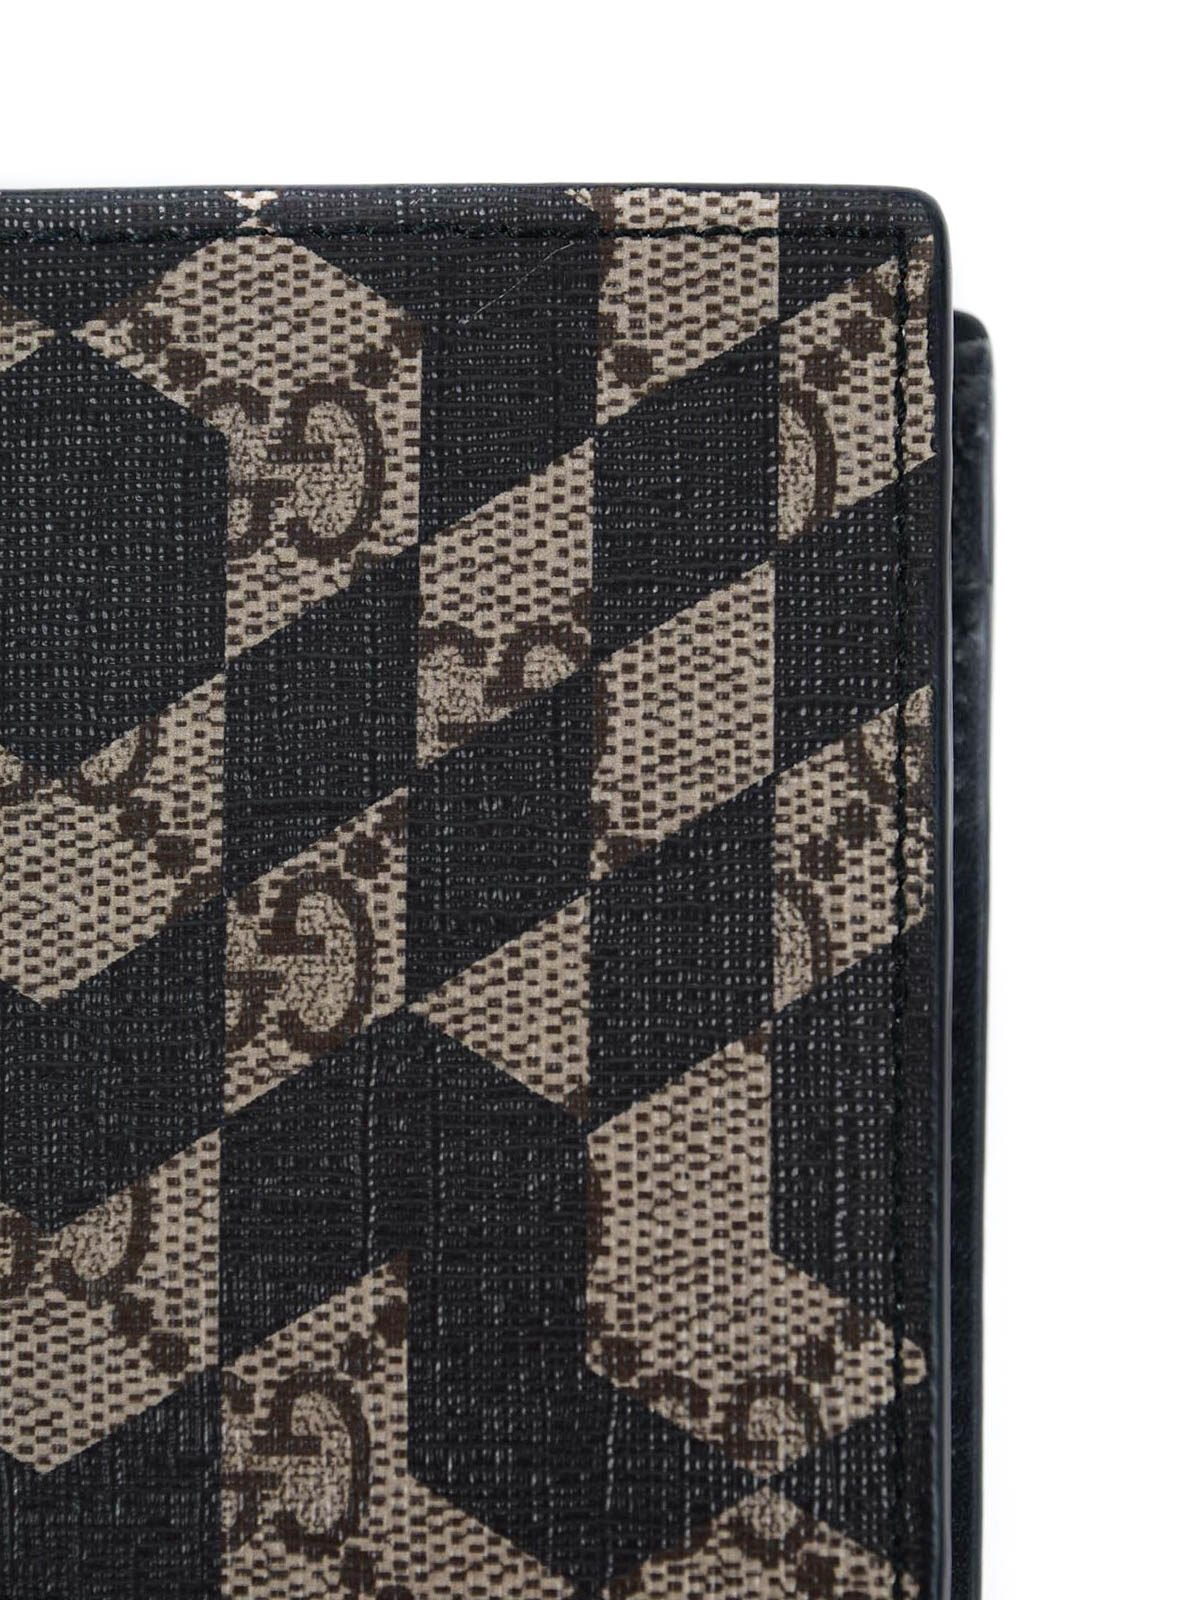 Wallets & purses Gucci - GG Supreme canvas wallet - 406558KVY1N9769